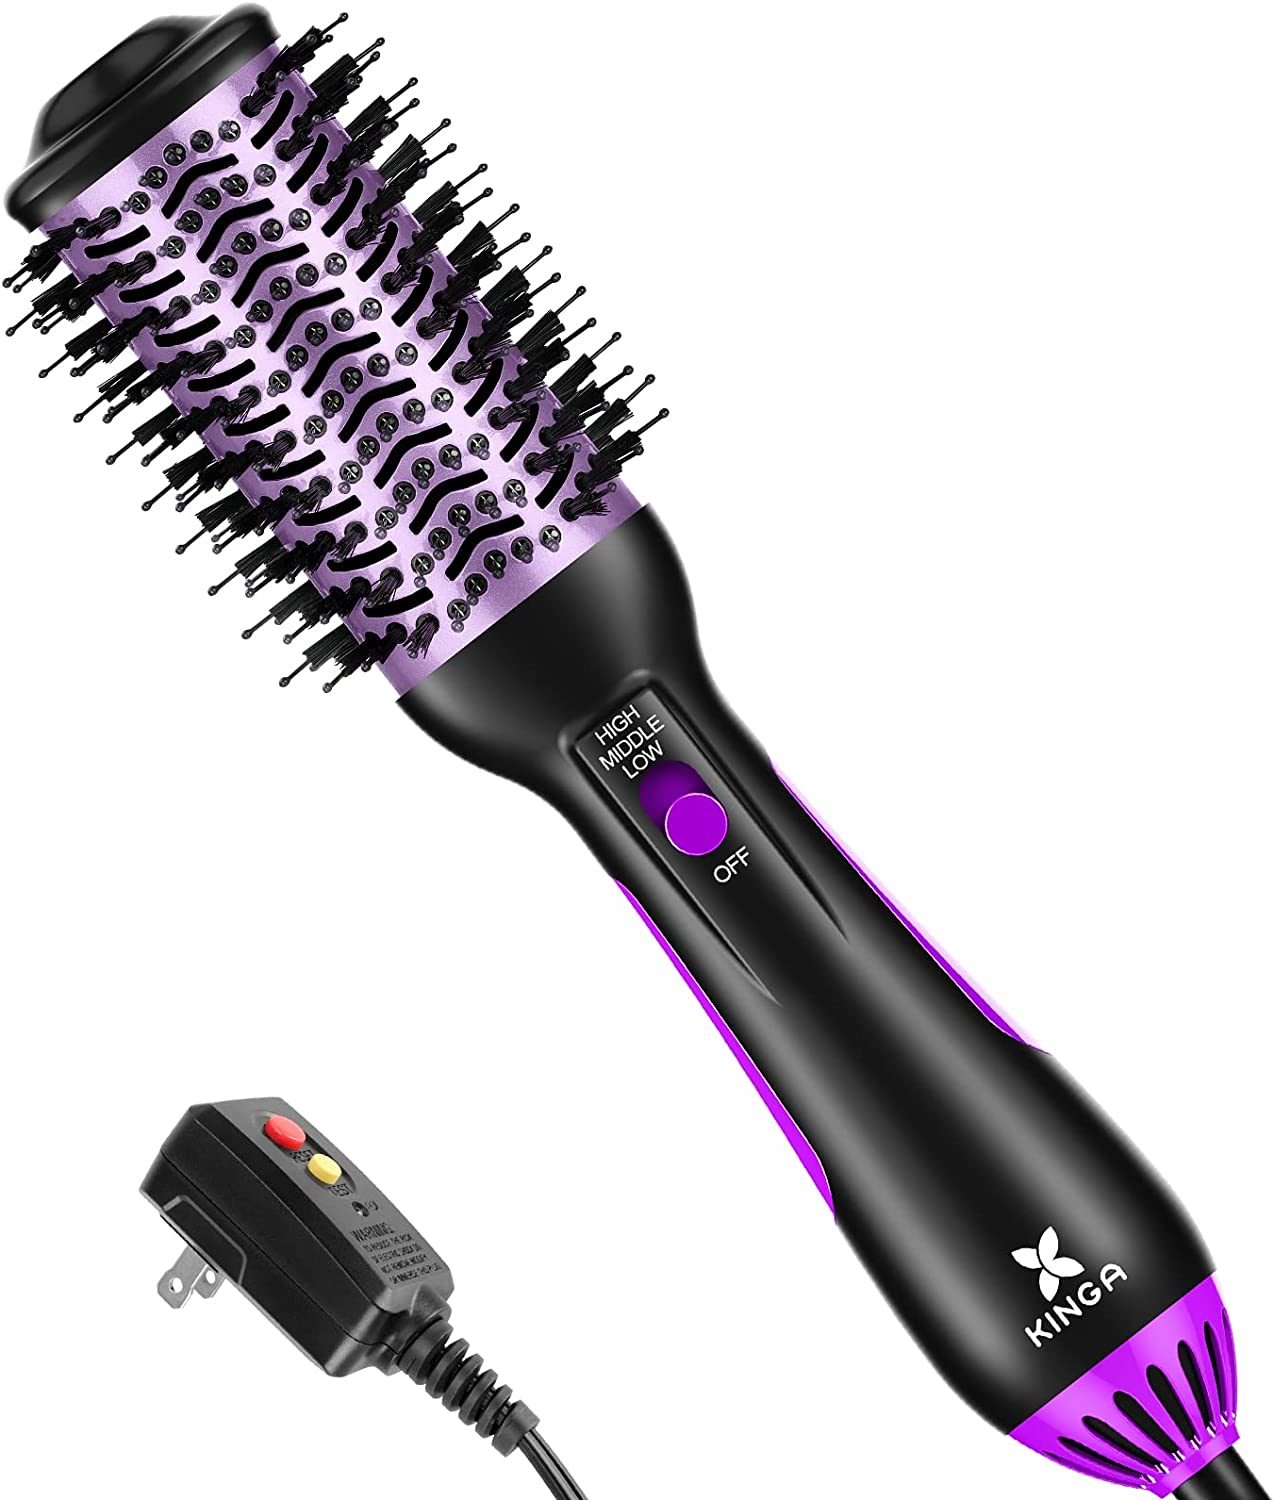 Kinga Hair Dryer Brush Blow Dryer Brush in One Professional 5 in 1 One Step Hot Air Brush Hoot Tools Blowout Brush Hair Dryer and Volumizer 1 Pack (Purple)